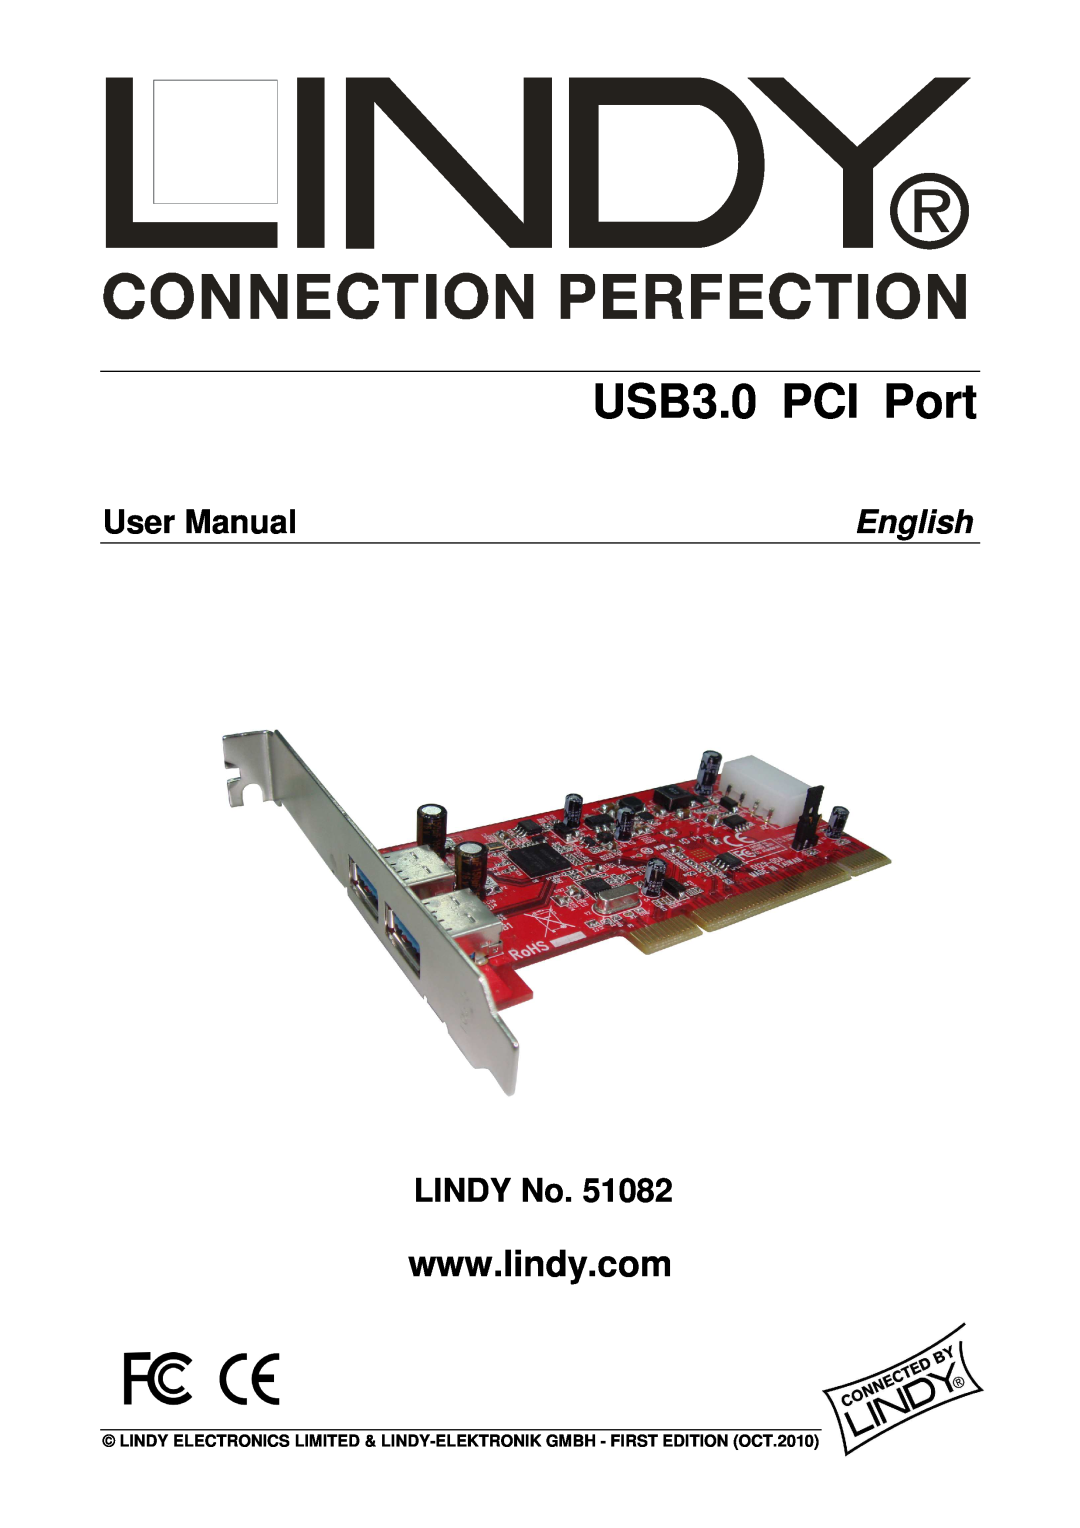 Lindy 51082 user manual User Manual, LINDY No, USB3.0 PCI Port, English 